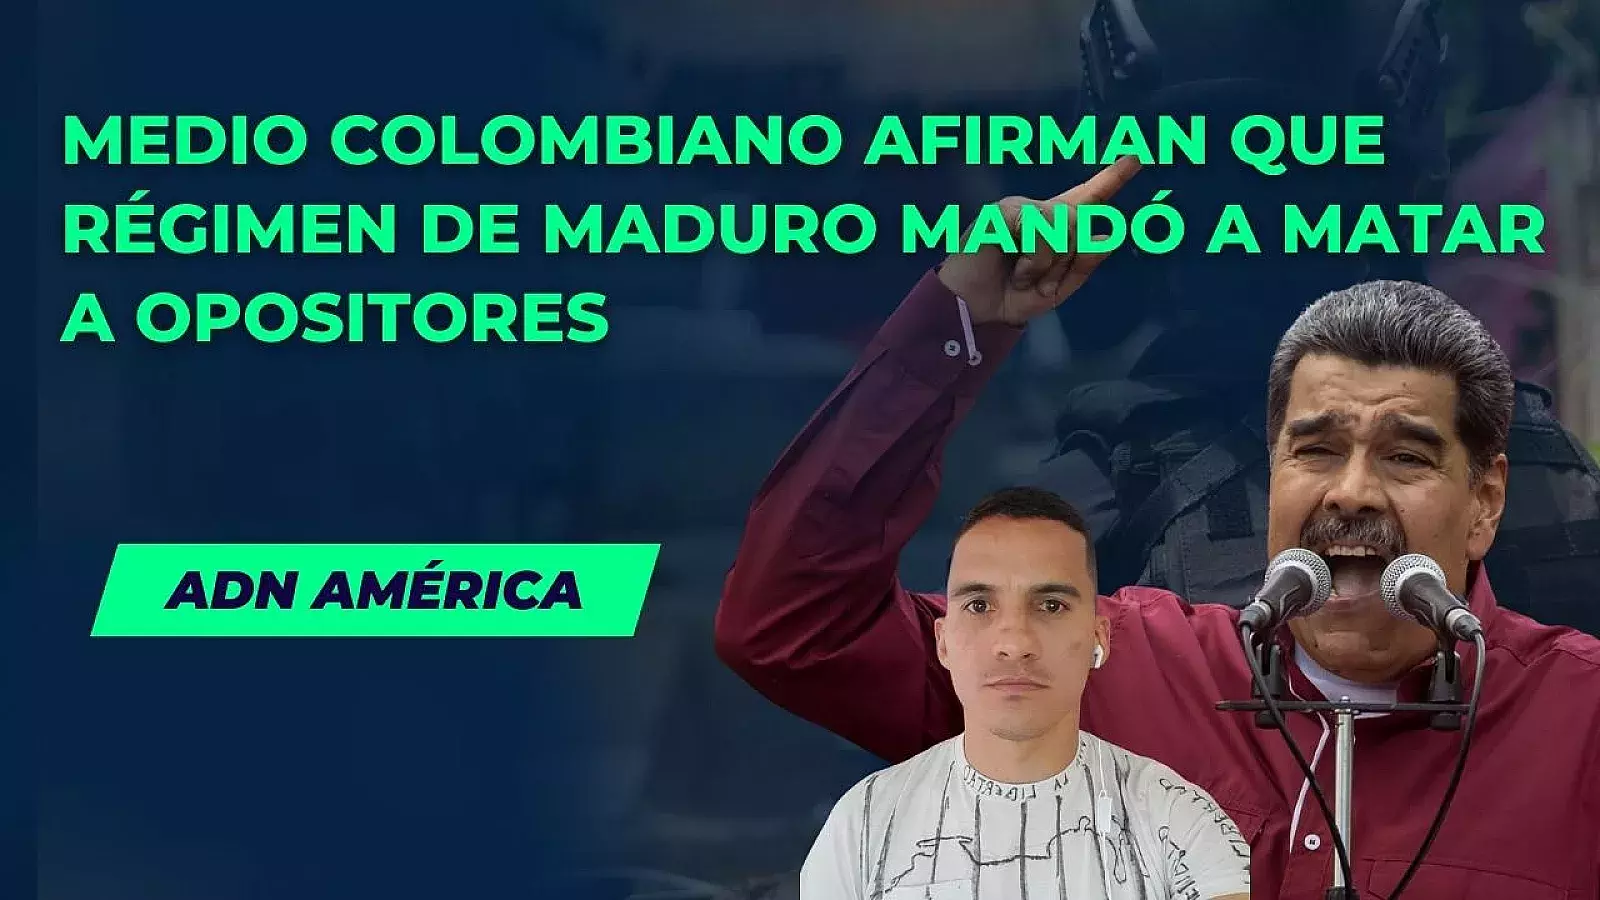 Medio colombiano afirma que régimen de Maduro mandó a matar a opositores